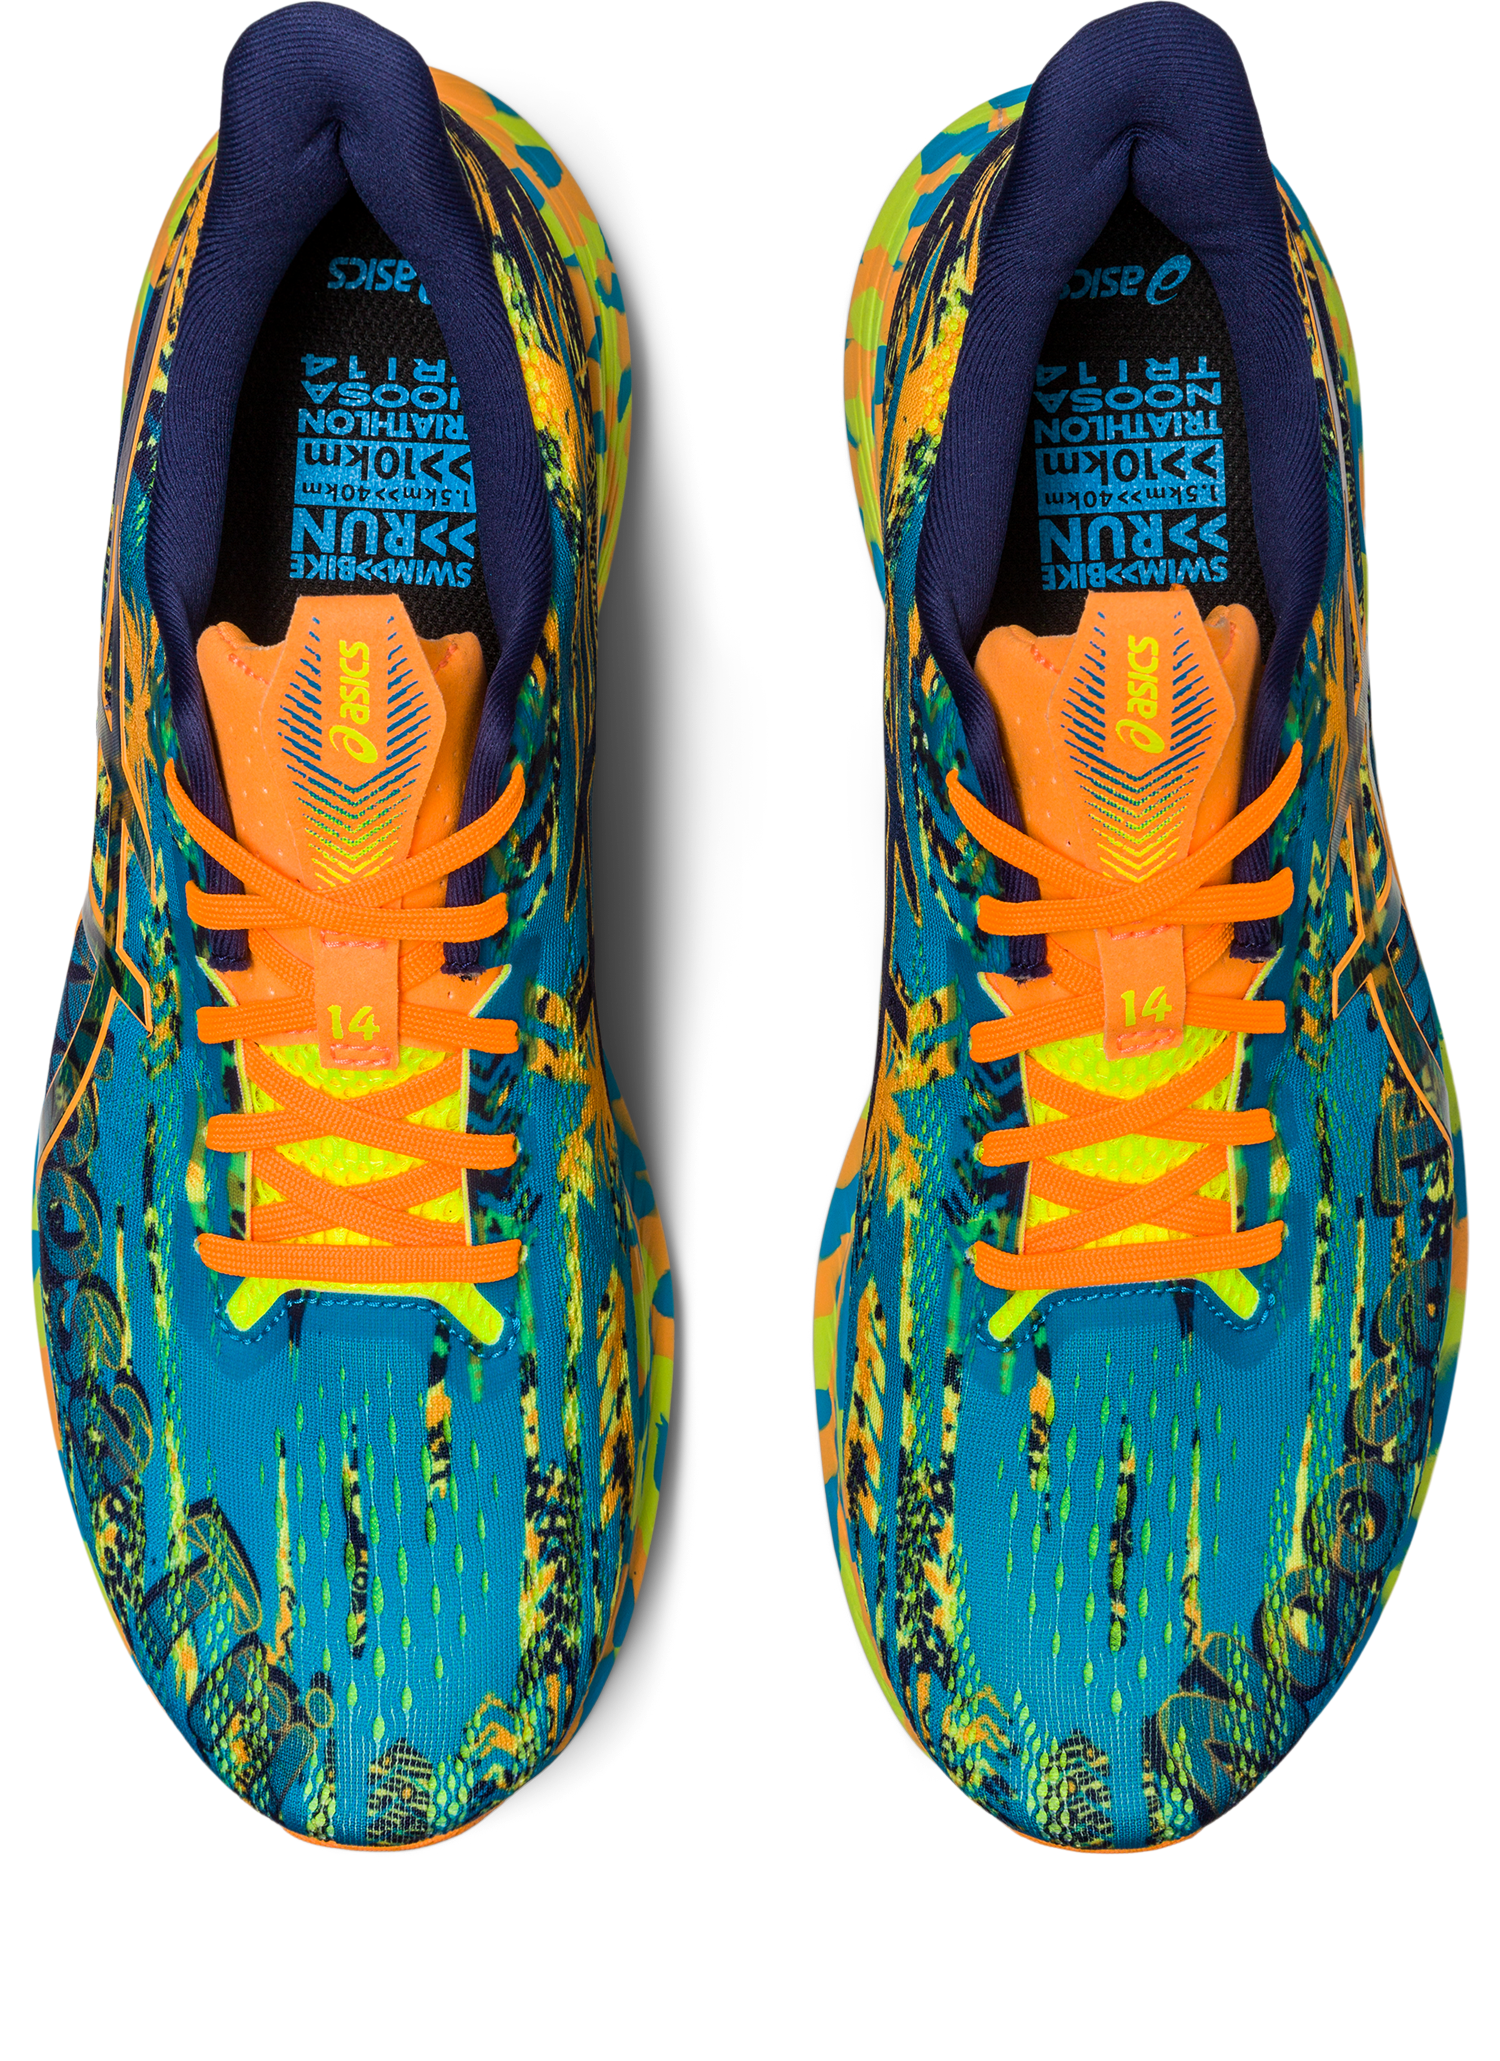 Asics Men's Noosa TRI 14 Running Shoes in Island Blue/Indigo Blue